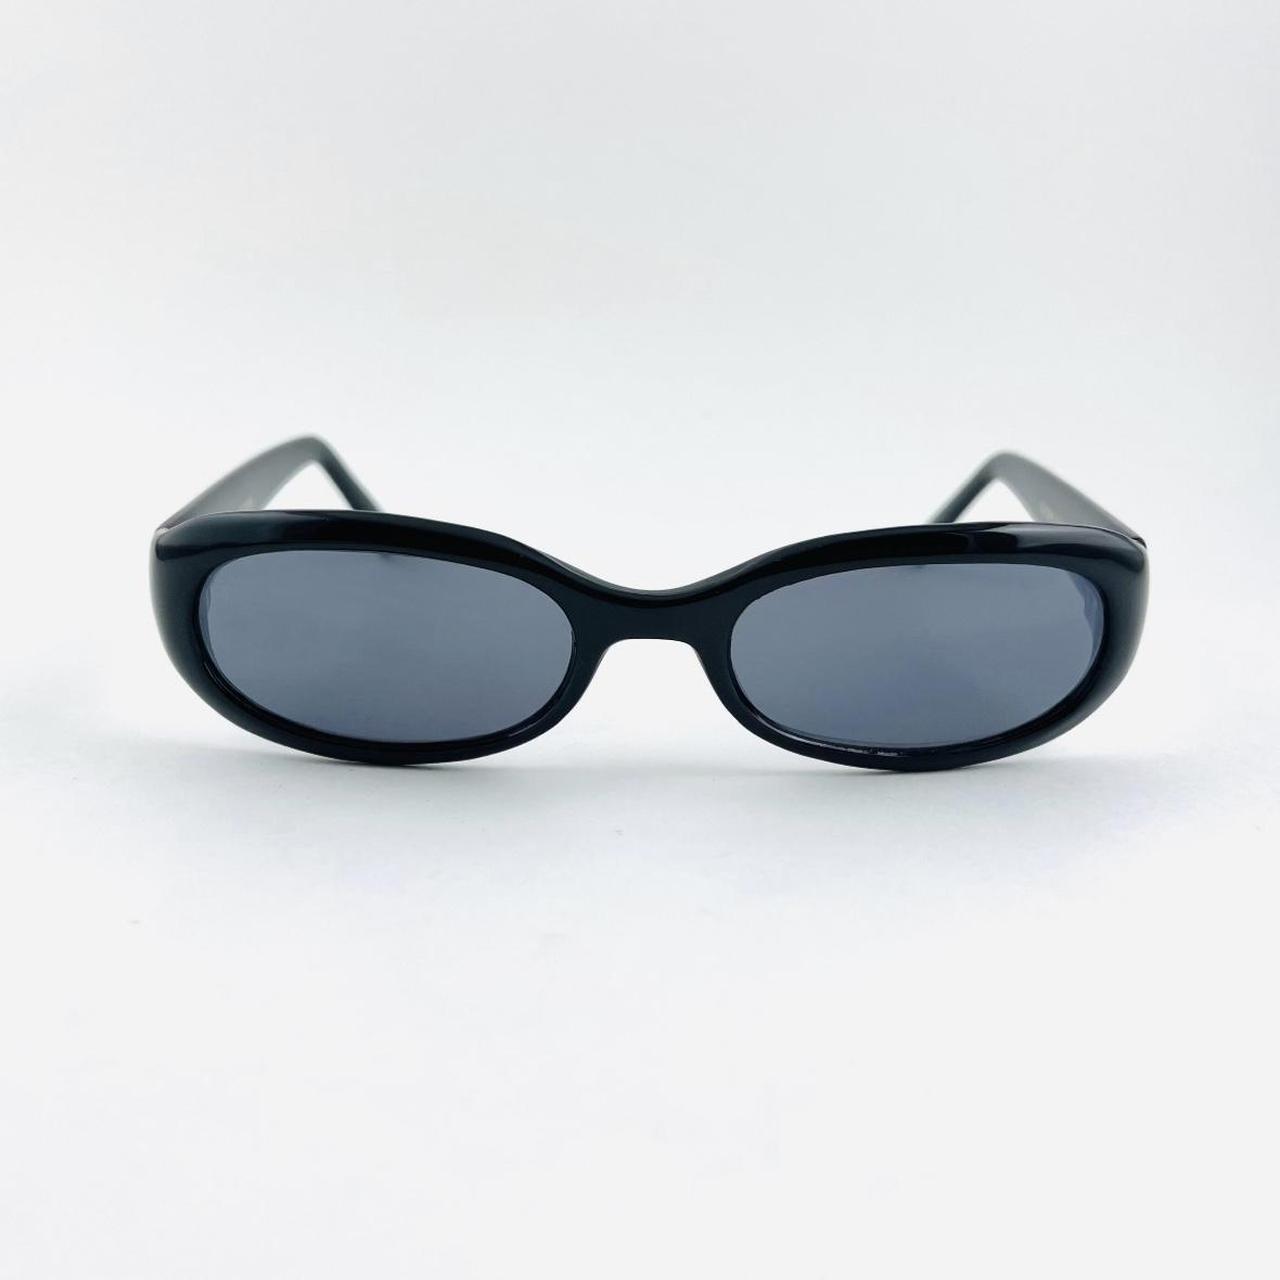 Vintage 90s Slim Black Oval Sunglasses With Depop 